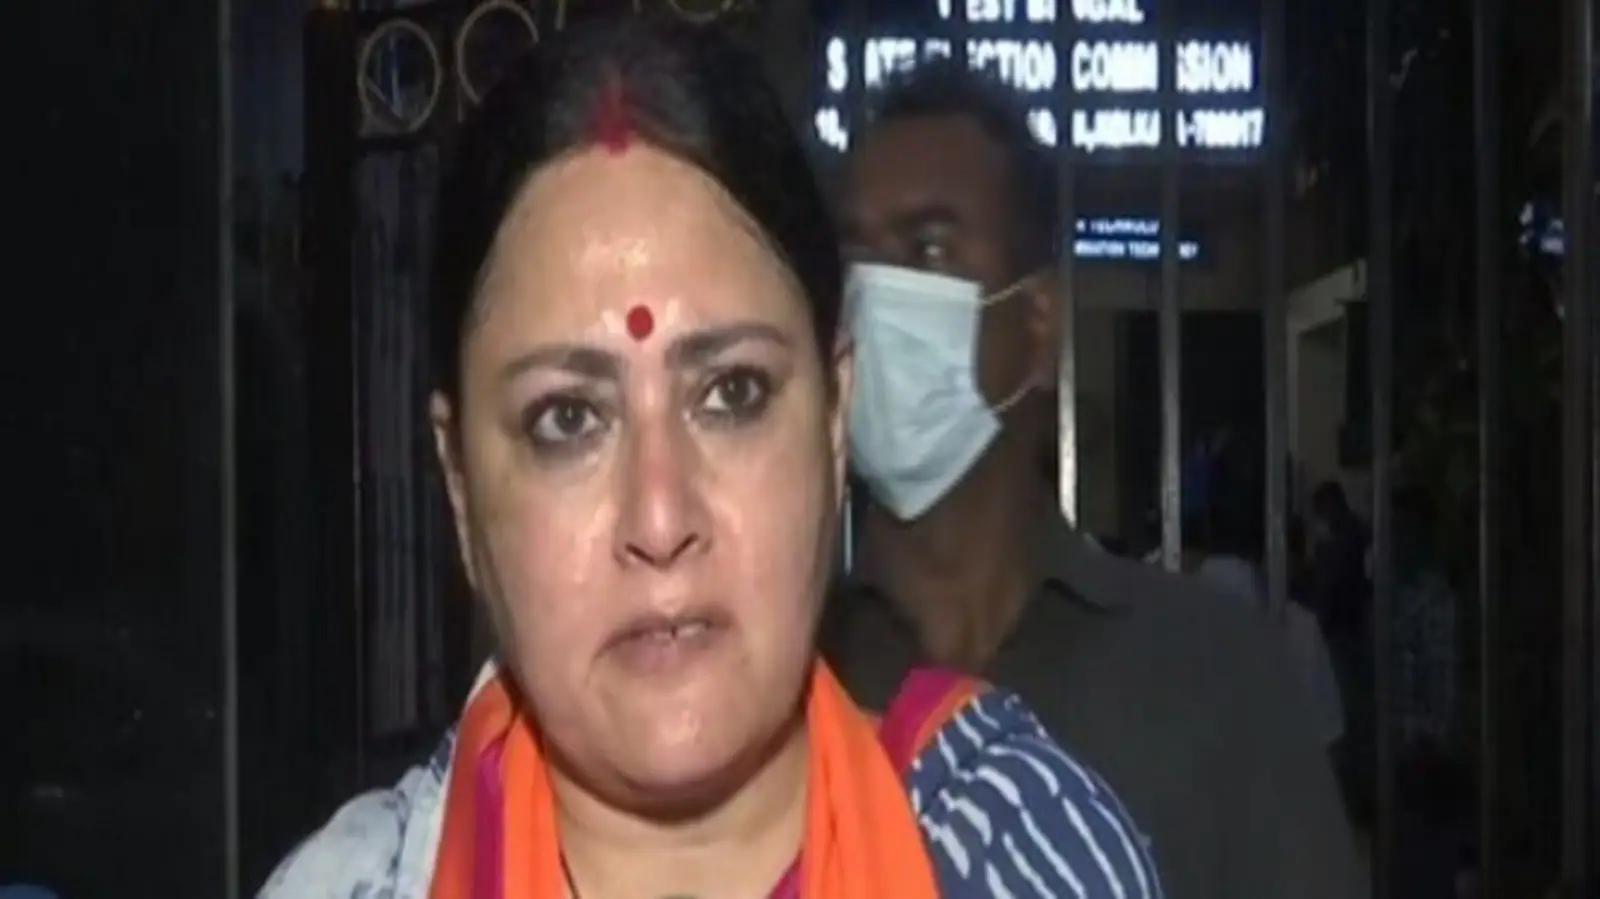 BJP MLA hits out at Mamata Banerjee gangrape case remarks: ‘We’re ashamed’